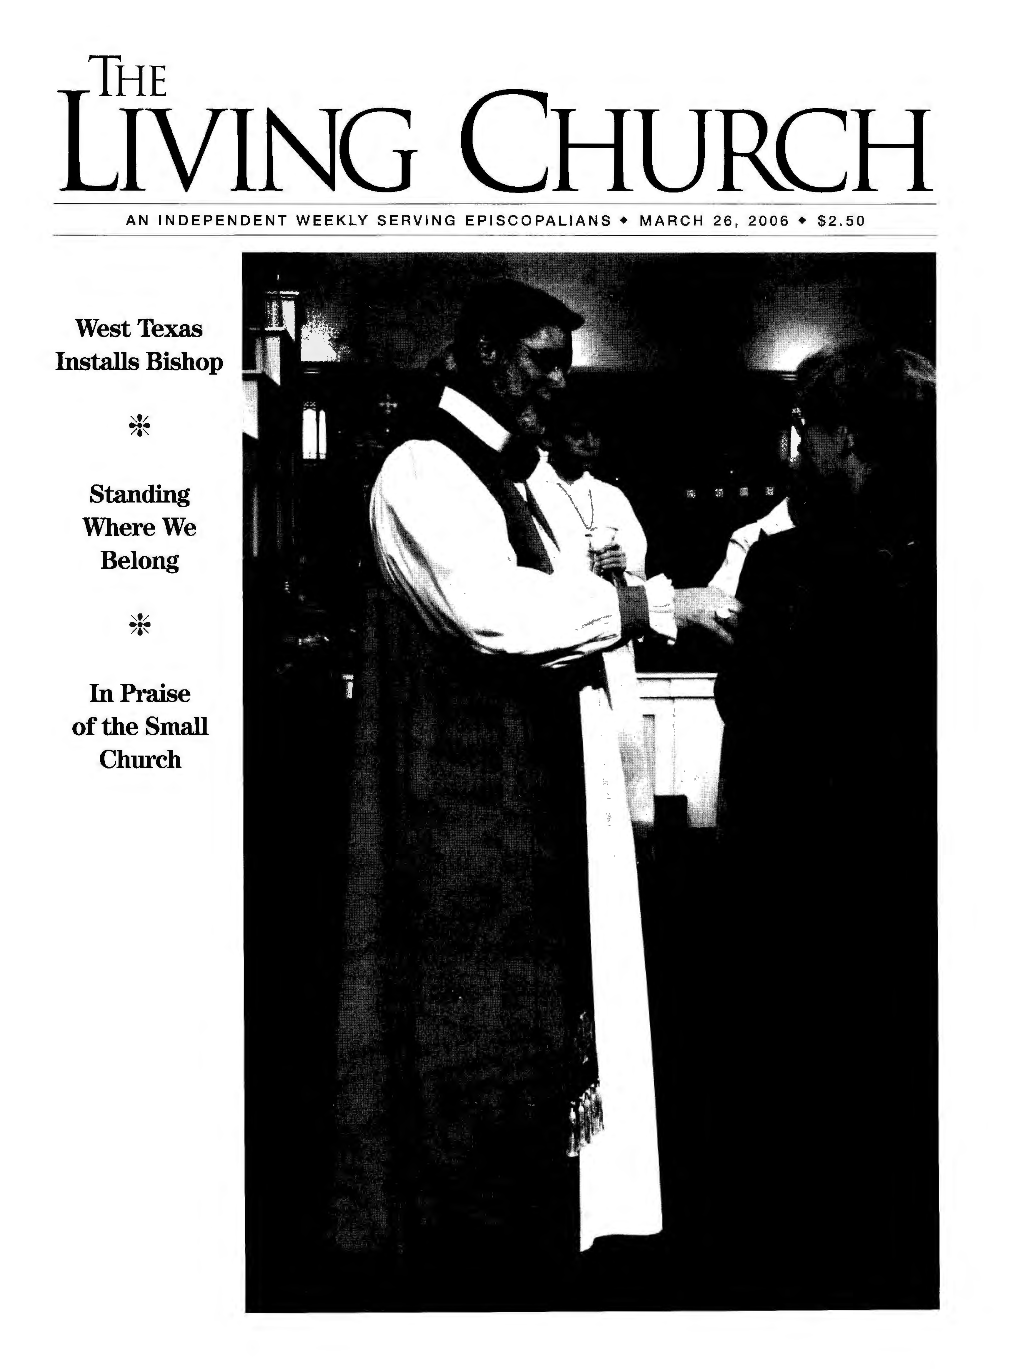 The Living Church Foundation , Lnc., at 816 E